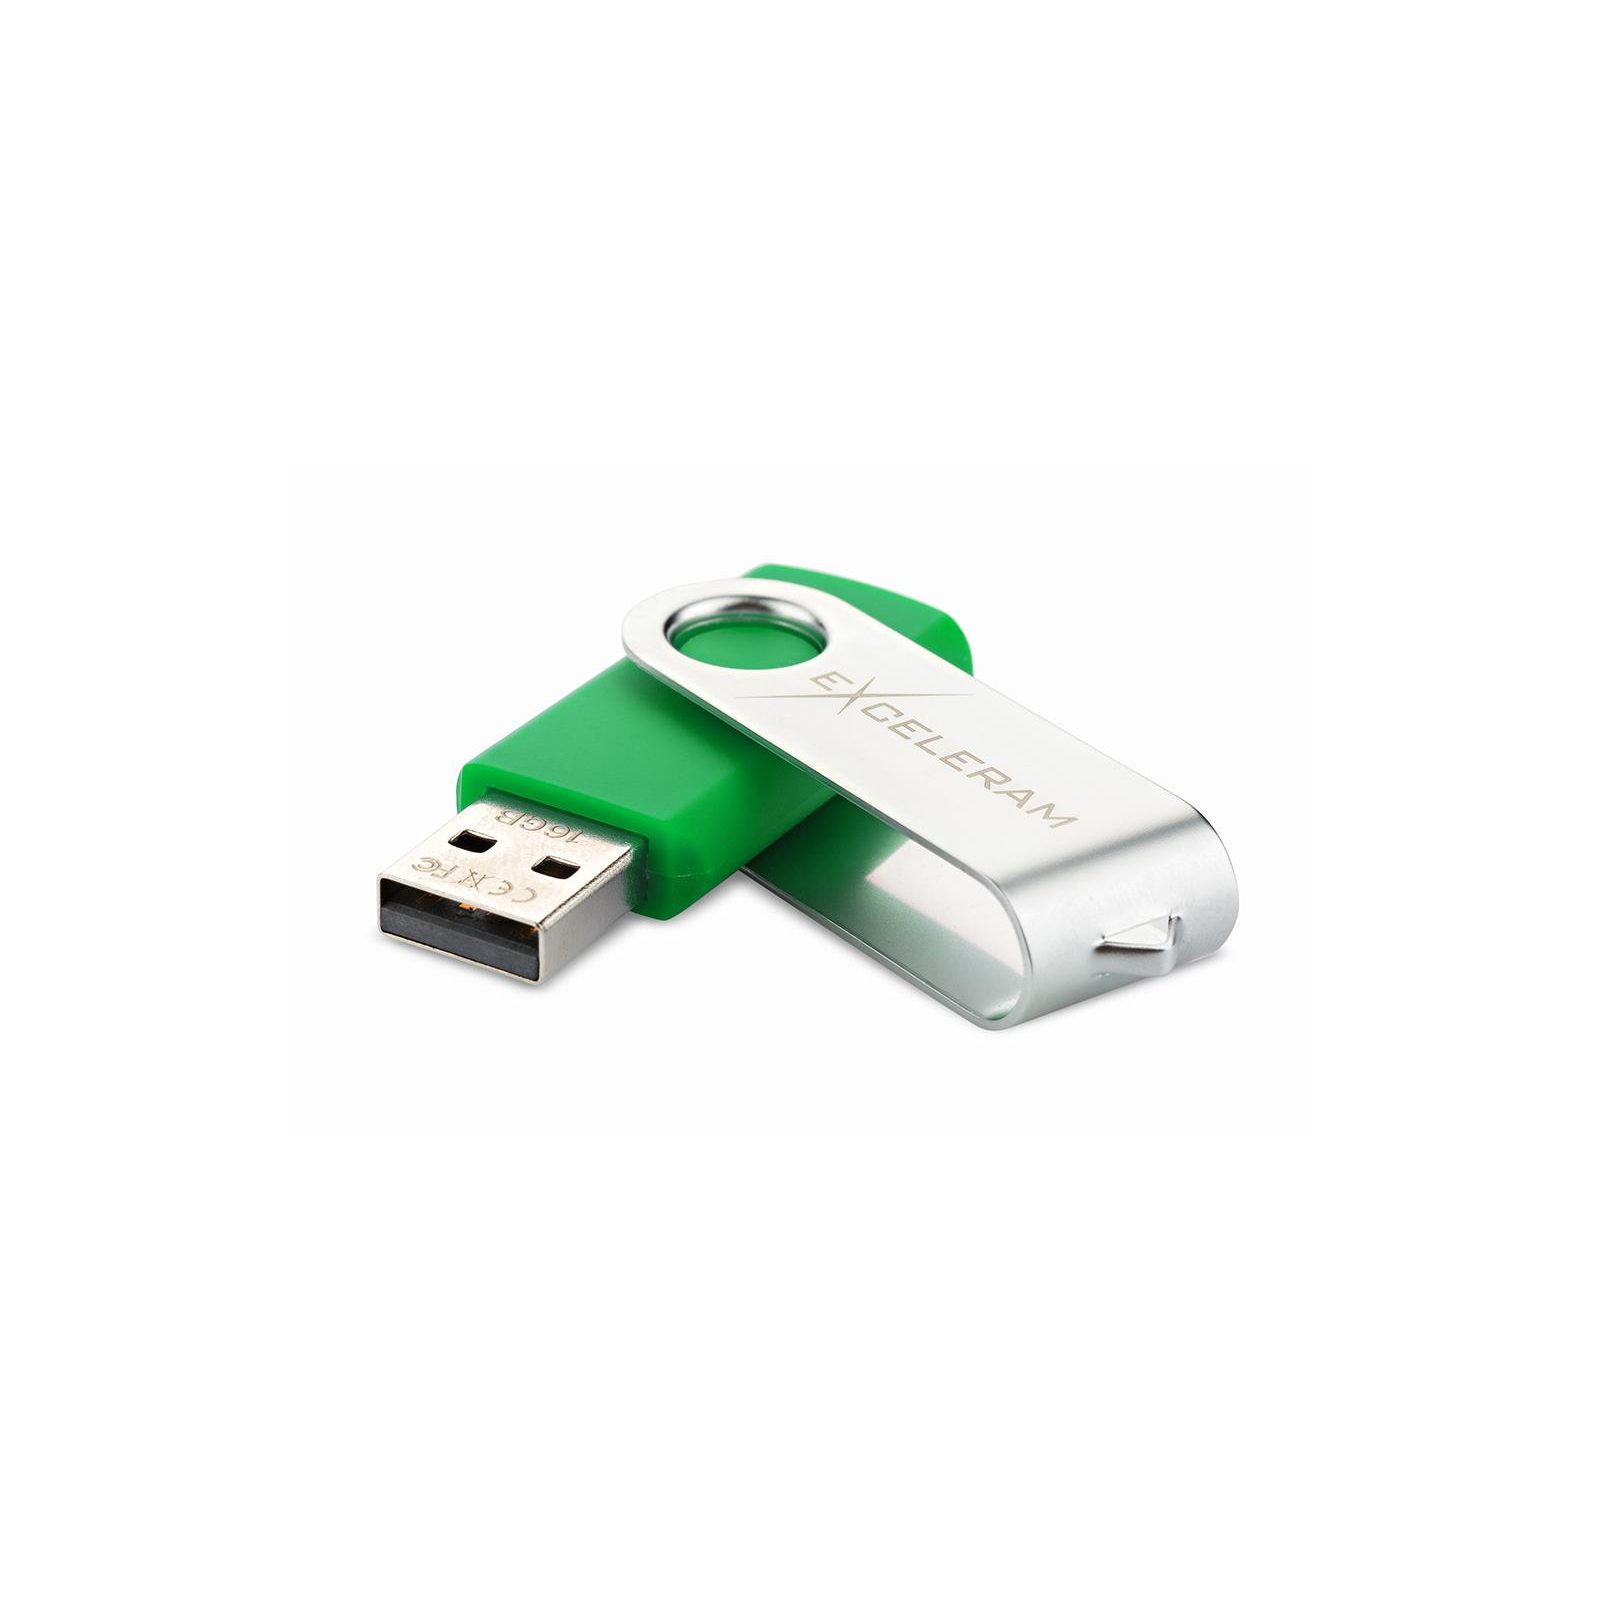 USB флеш накопитель eXceleram 32GB P1 Series Silver/Purple USB 2.0 (EXP1U2SIPU32) изображение 2